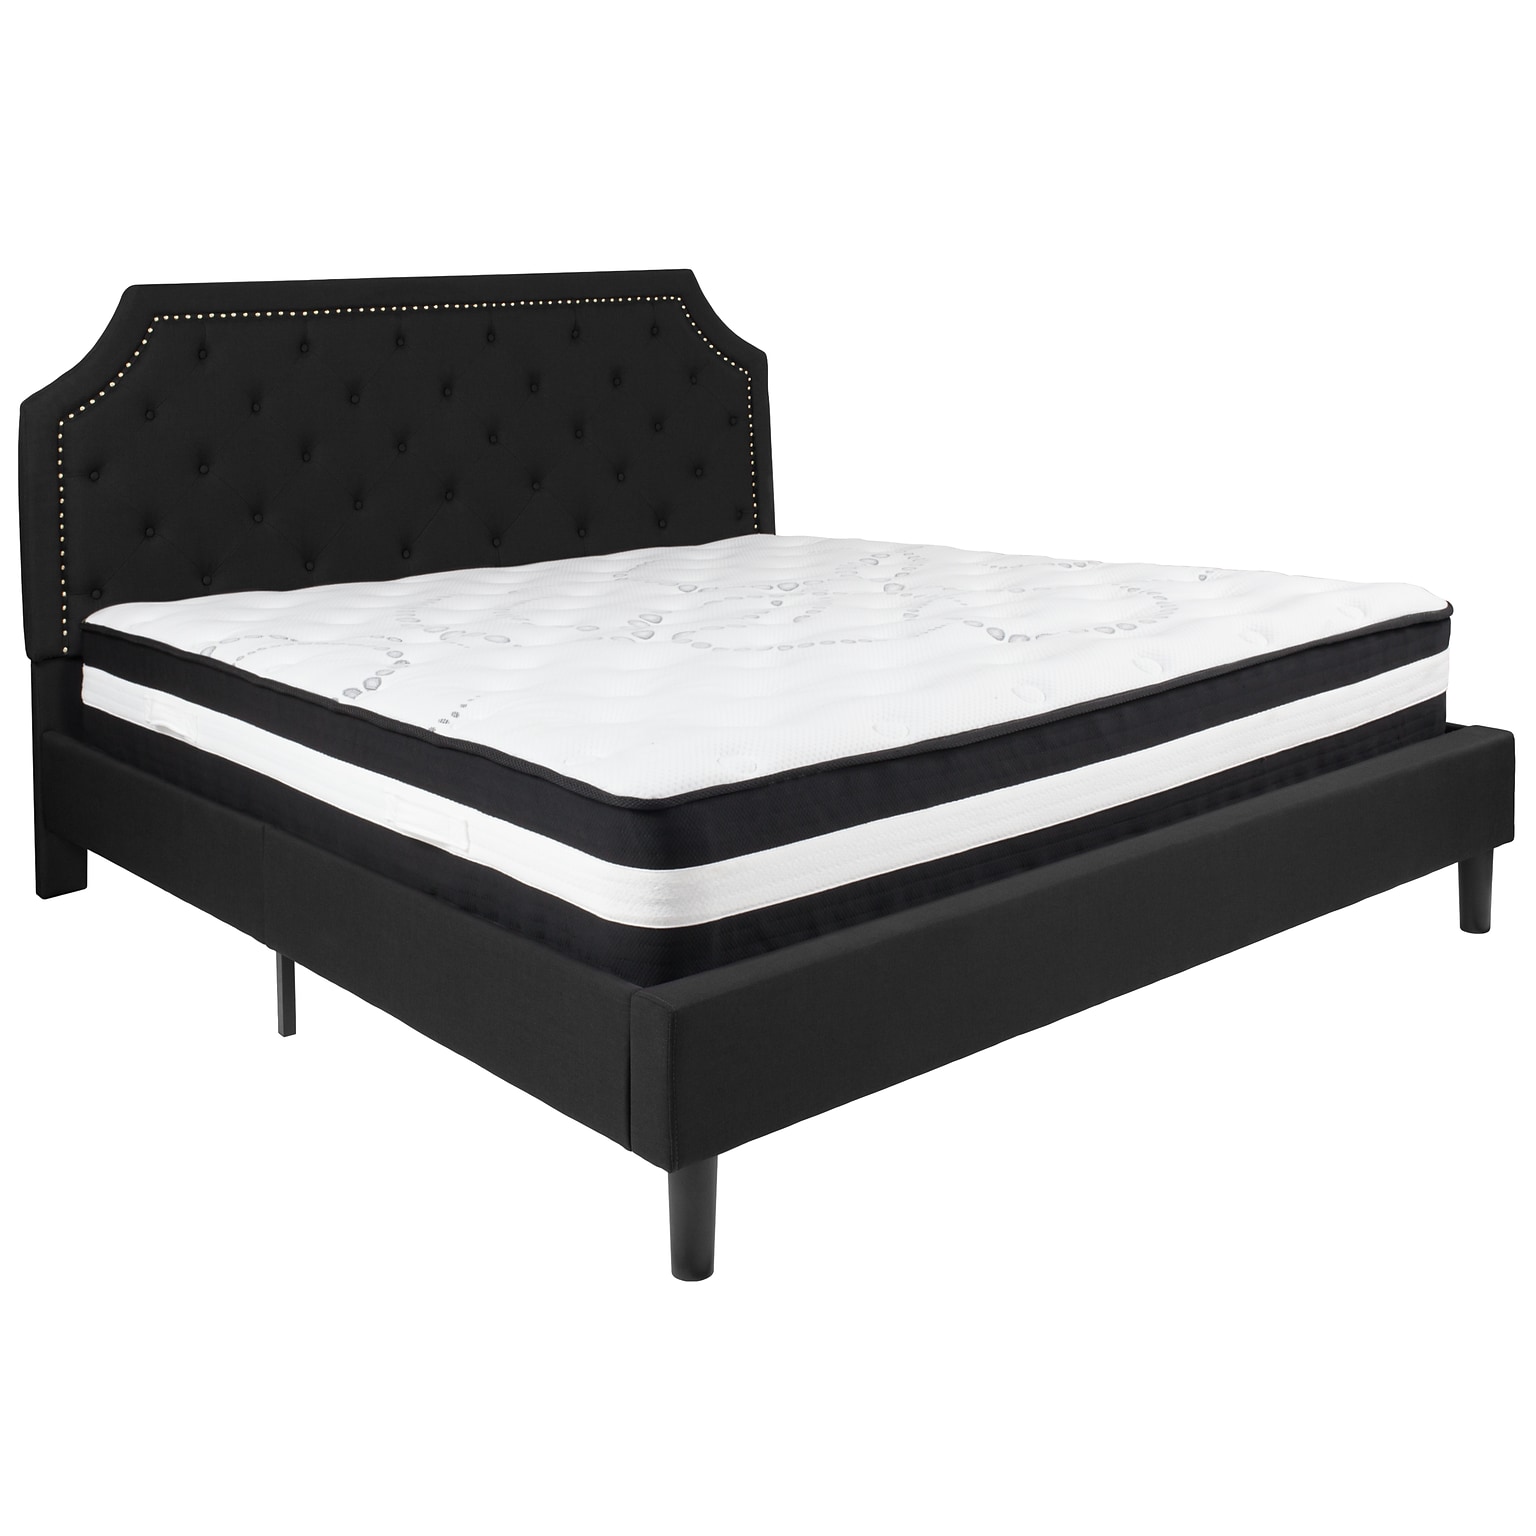 Flash Furniture Brighton Tufted Upholstered Platform Bed in Black Fabric with Pocket Spring Mattress, King (SLBM8)